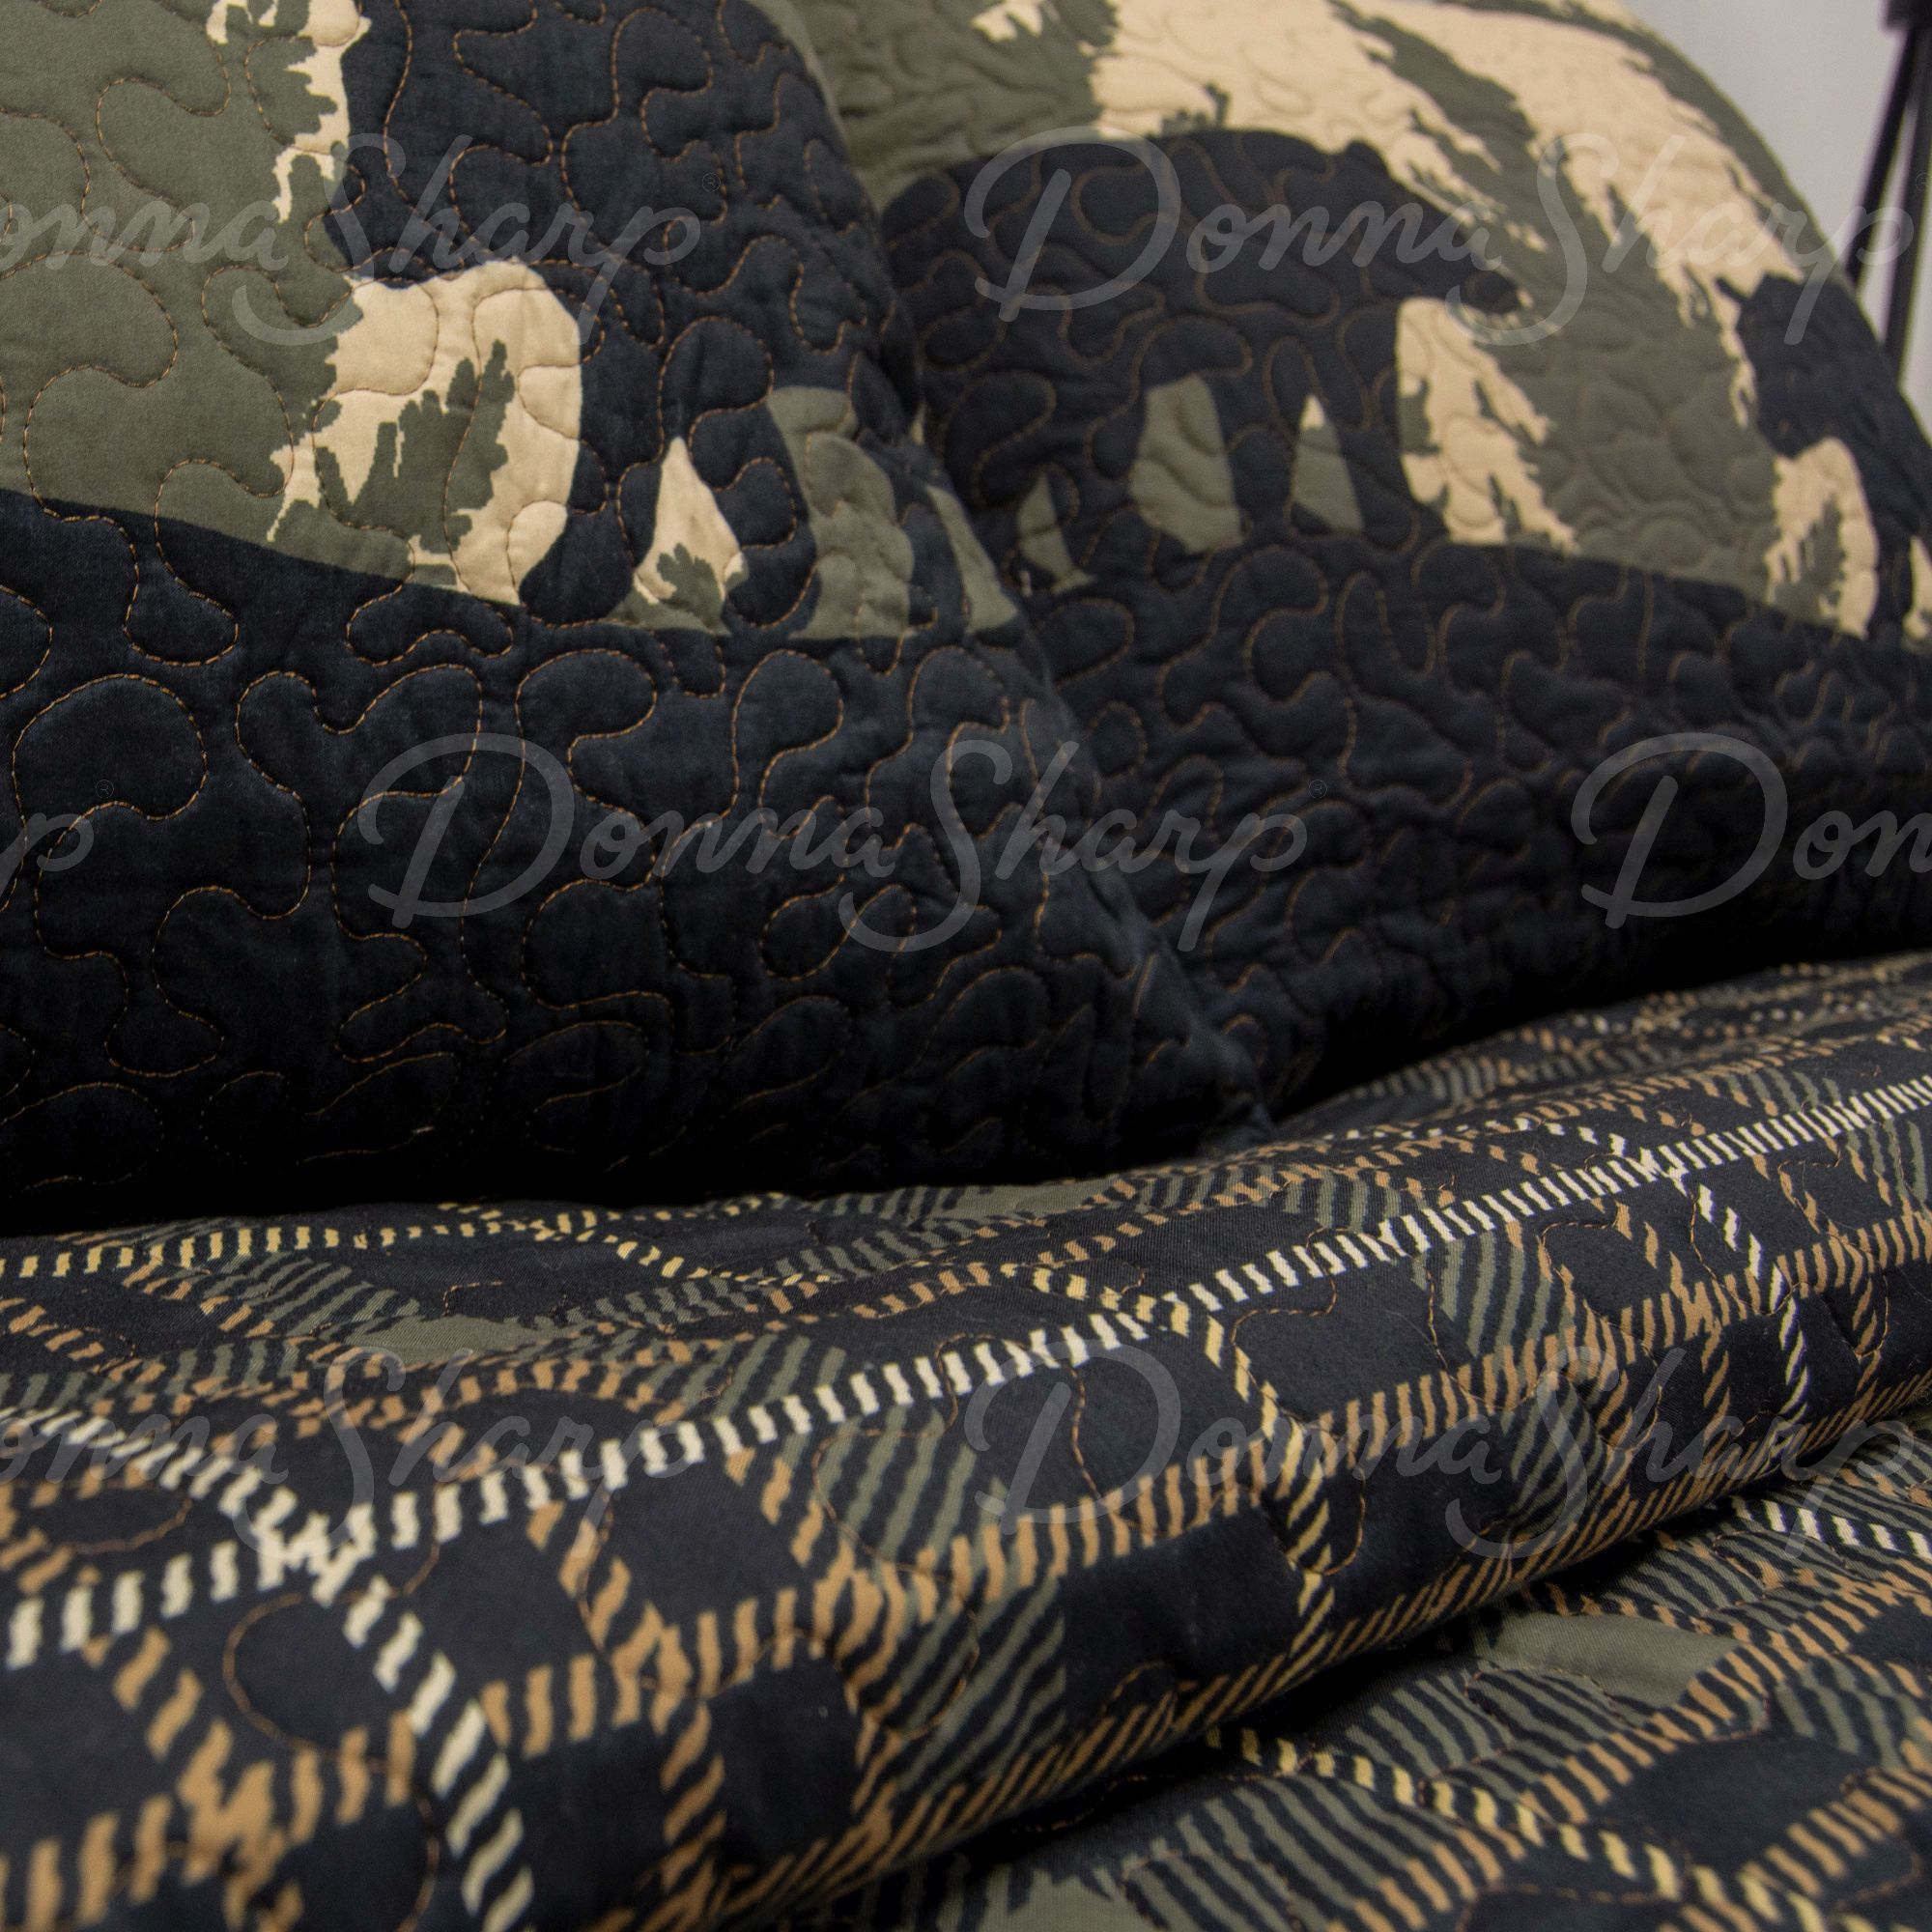 Donna Sharp Bear Walk Plaid Decorative Paw Pillow, 33464